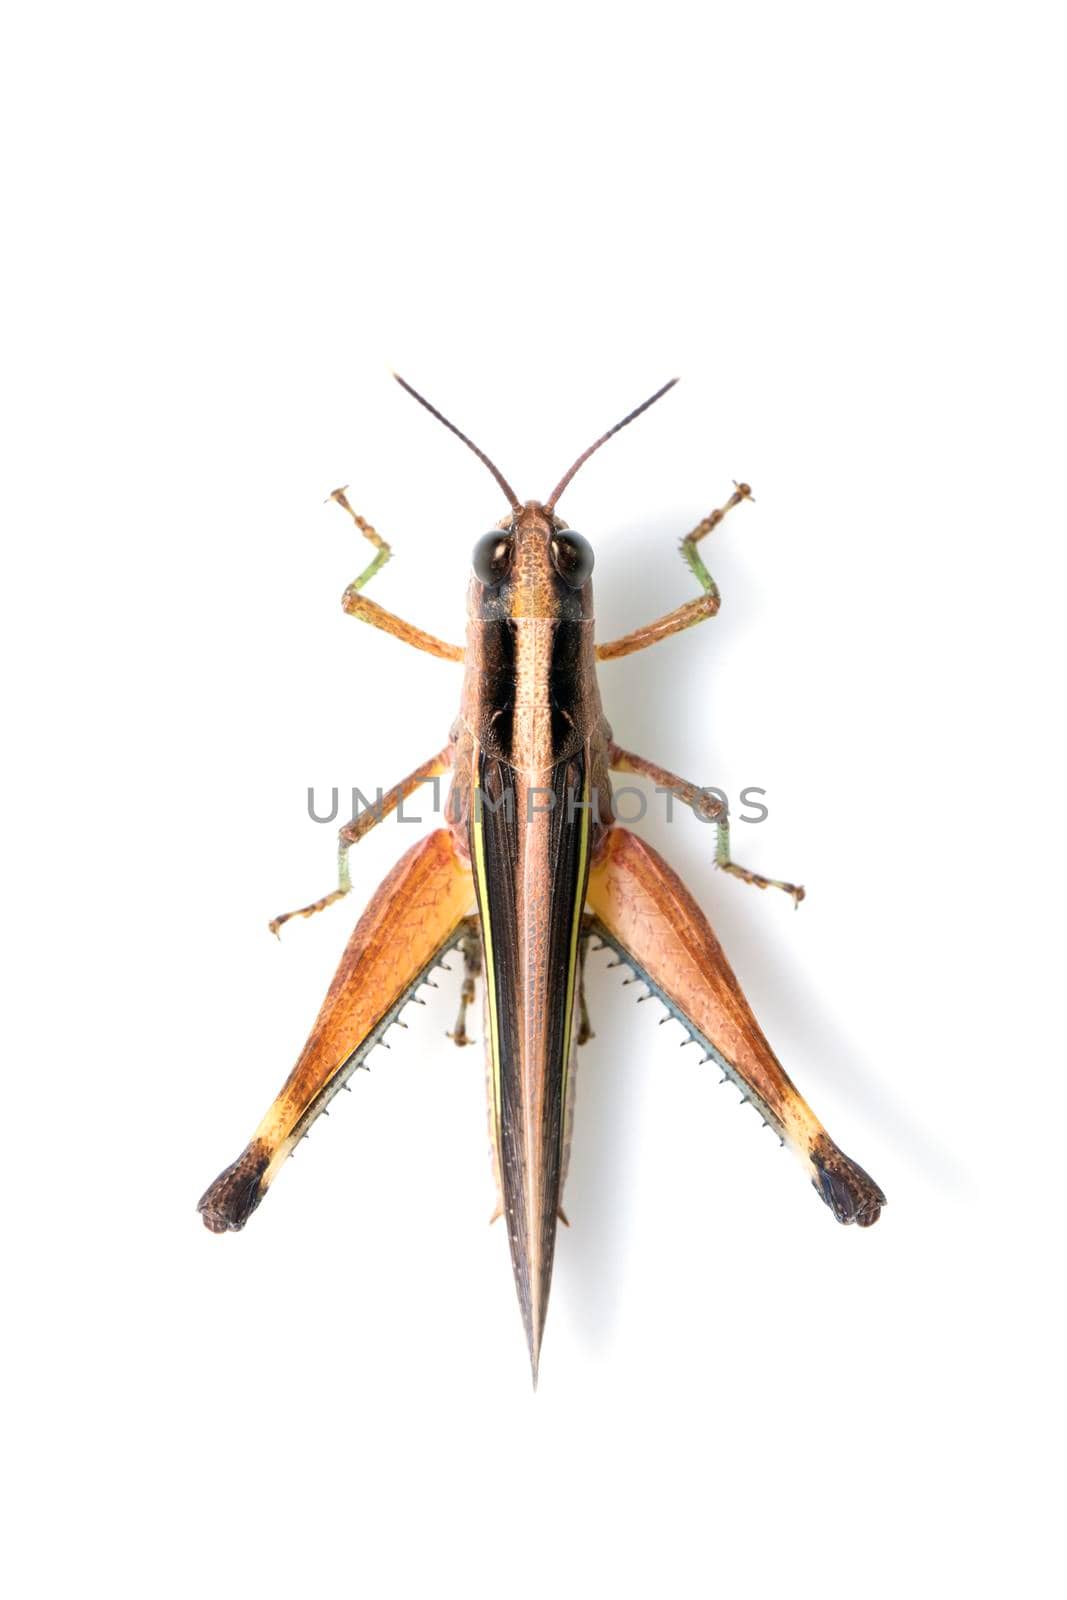 Image of sugarcane white-tipped locust grasshopper (Ceracris fasciata) isolated on white background. Insect Animal. Caelifera., Acrididae by yod67